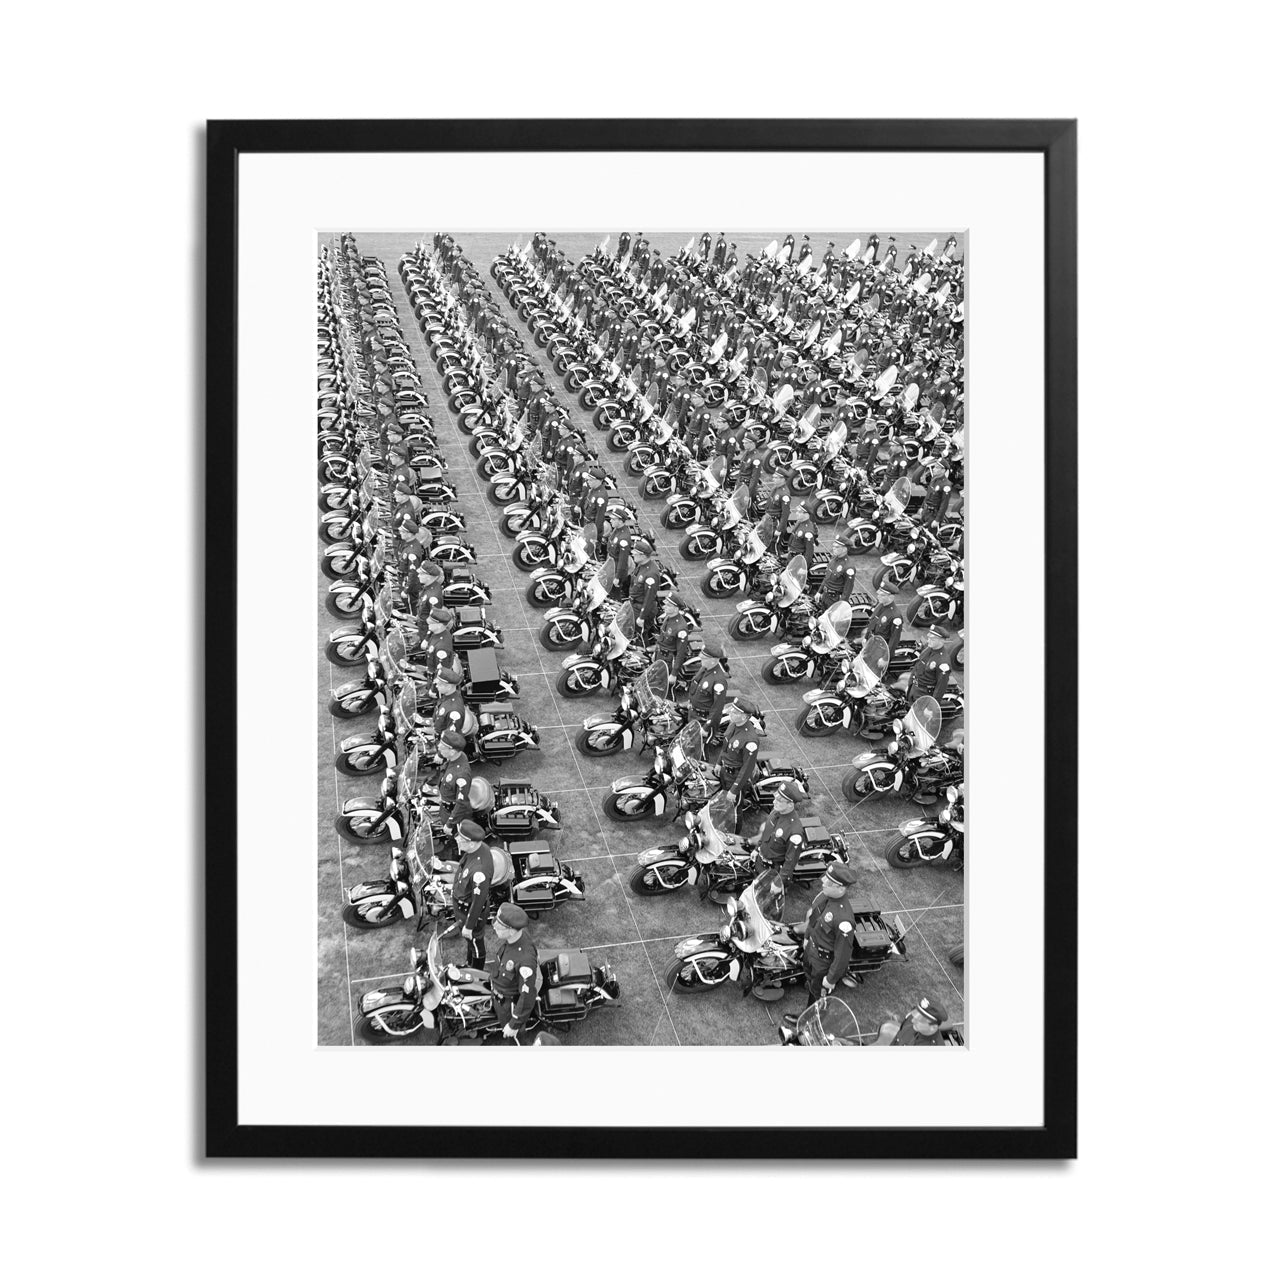 LA Police Motorcycle Framed Print